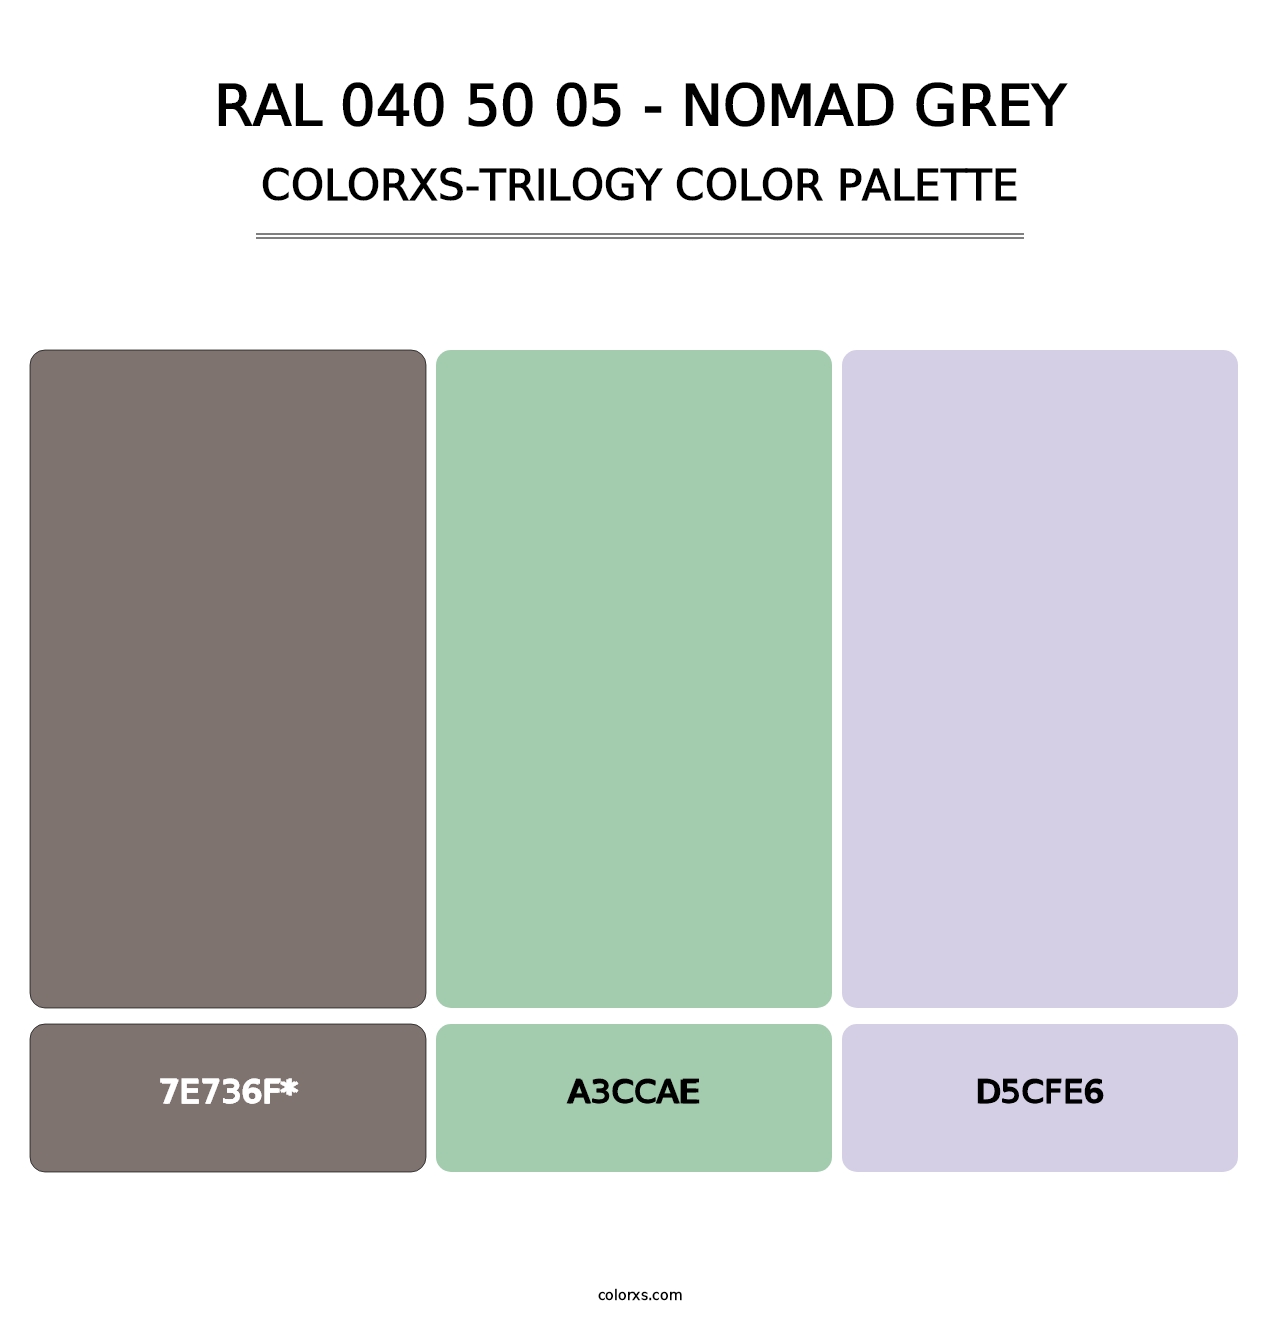 RAL 040 50 05 - Nomad Grey - Colorxs Trilogy Palette